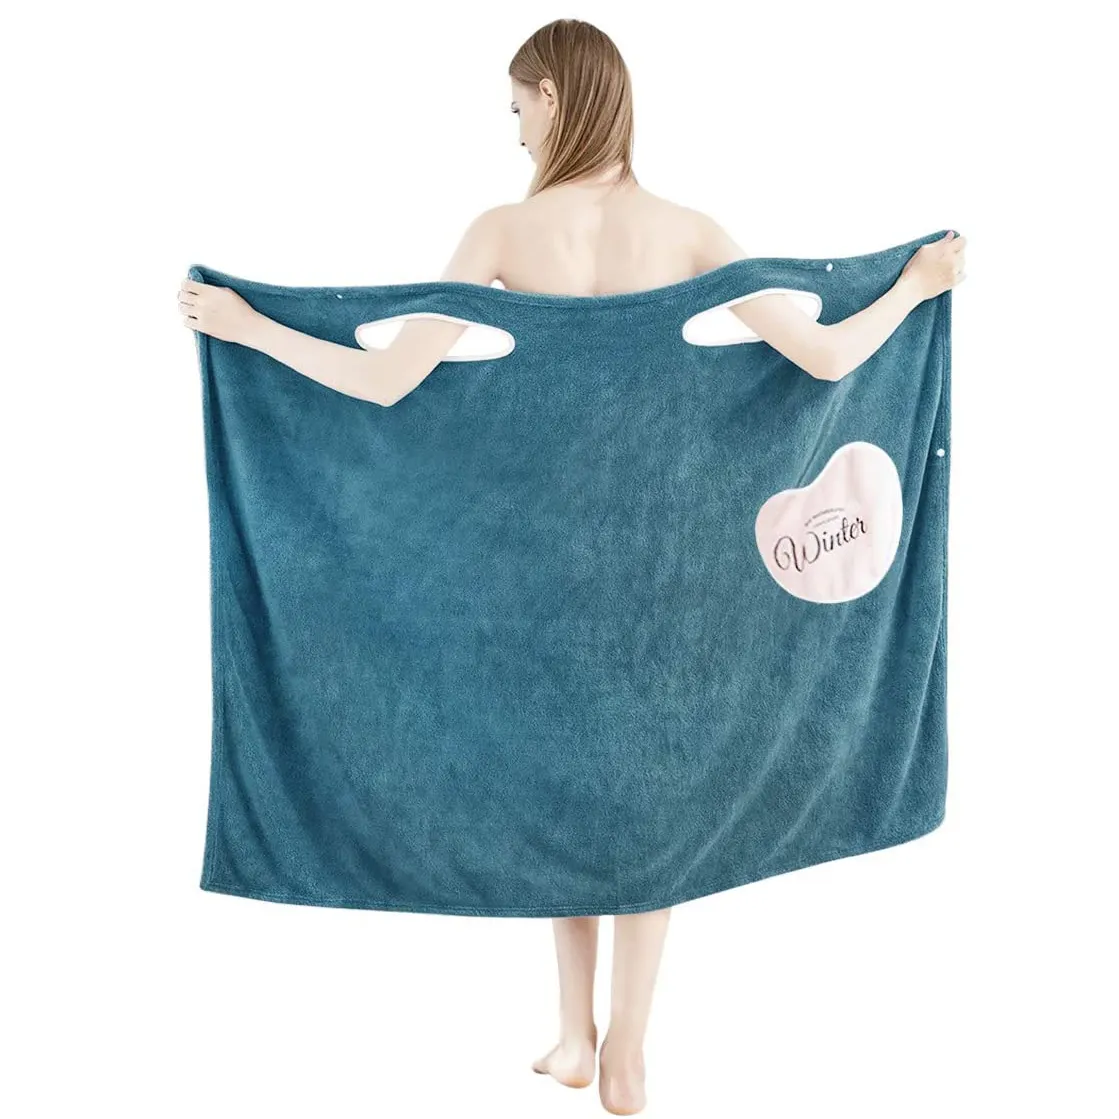 Women Thick Warm Wearable Bath Towel Wrap Luxury Cozy Coral Fleece Highly Water Absorbent Beach Spa Gym Bathrobes Slip Dress